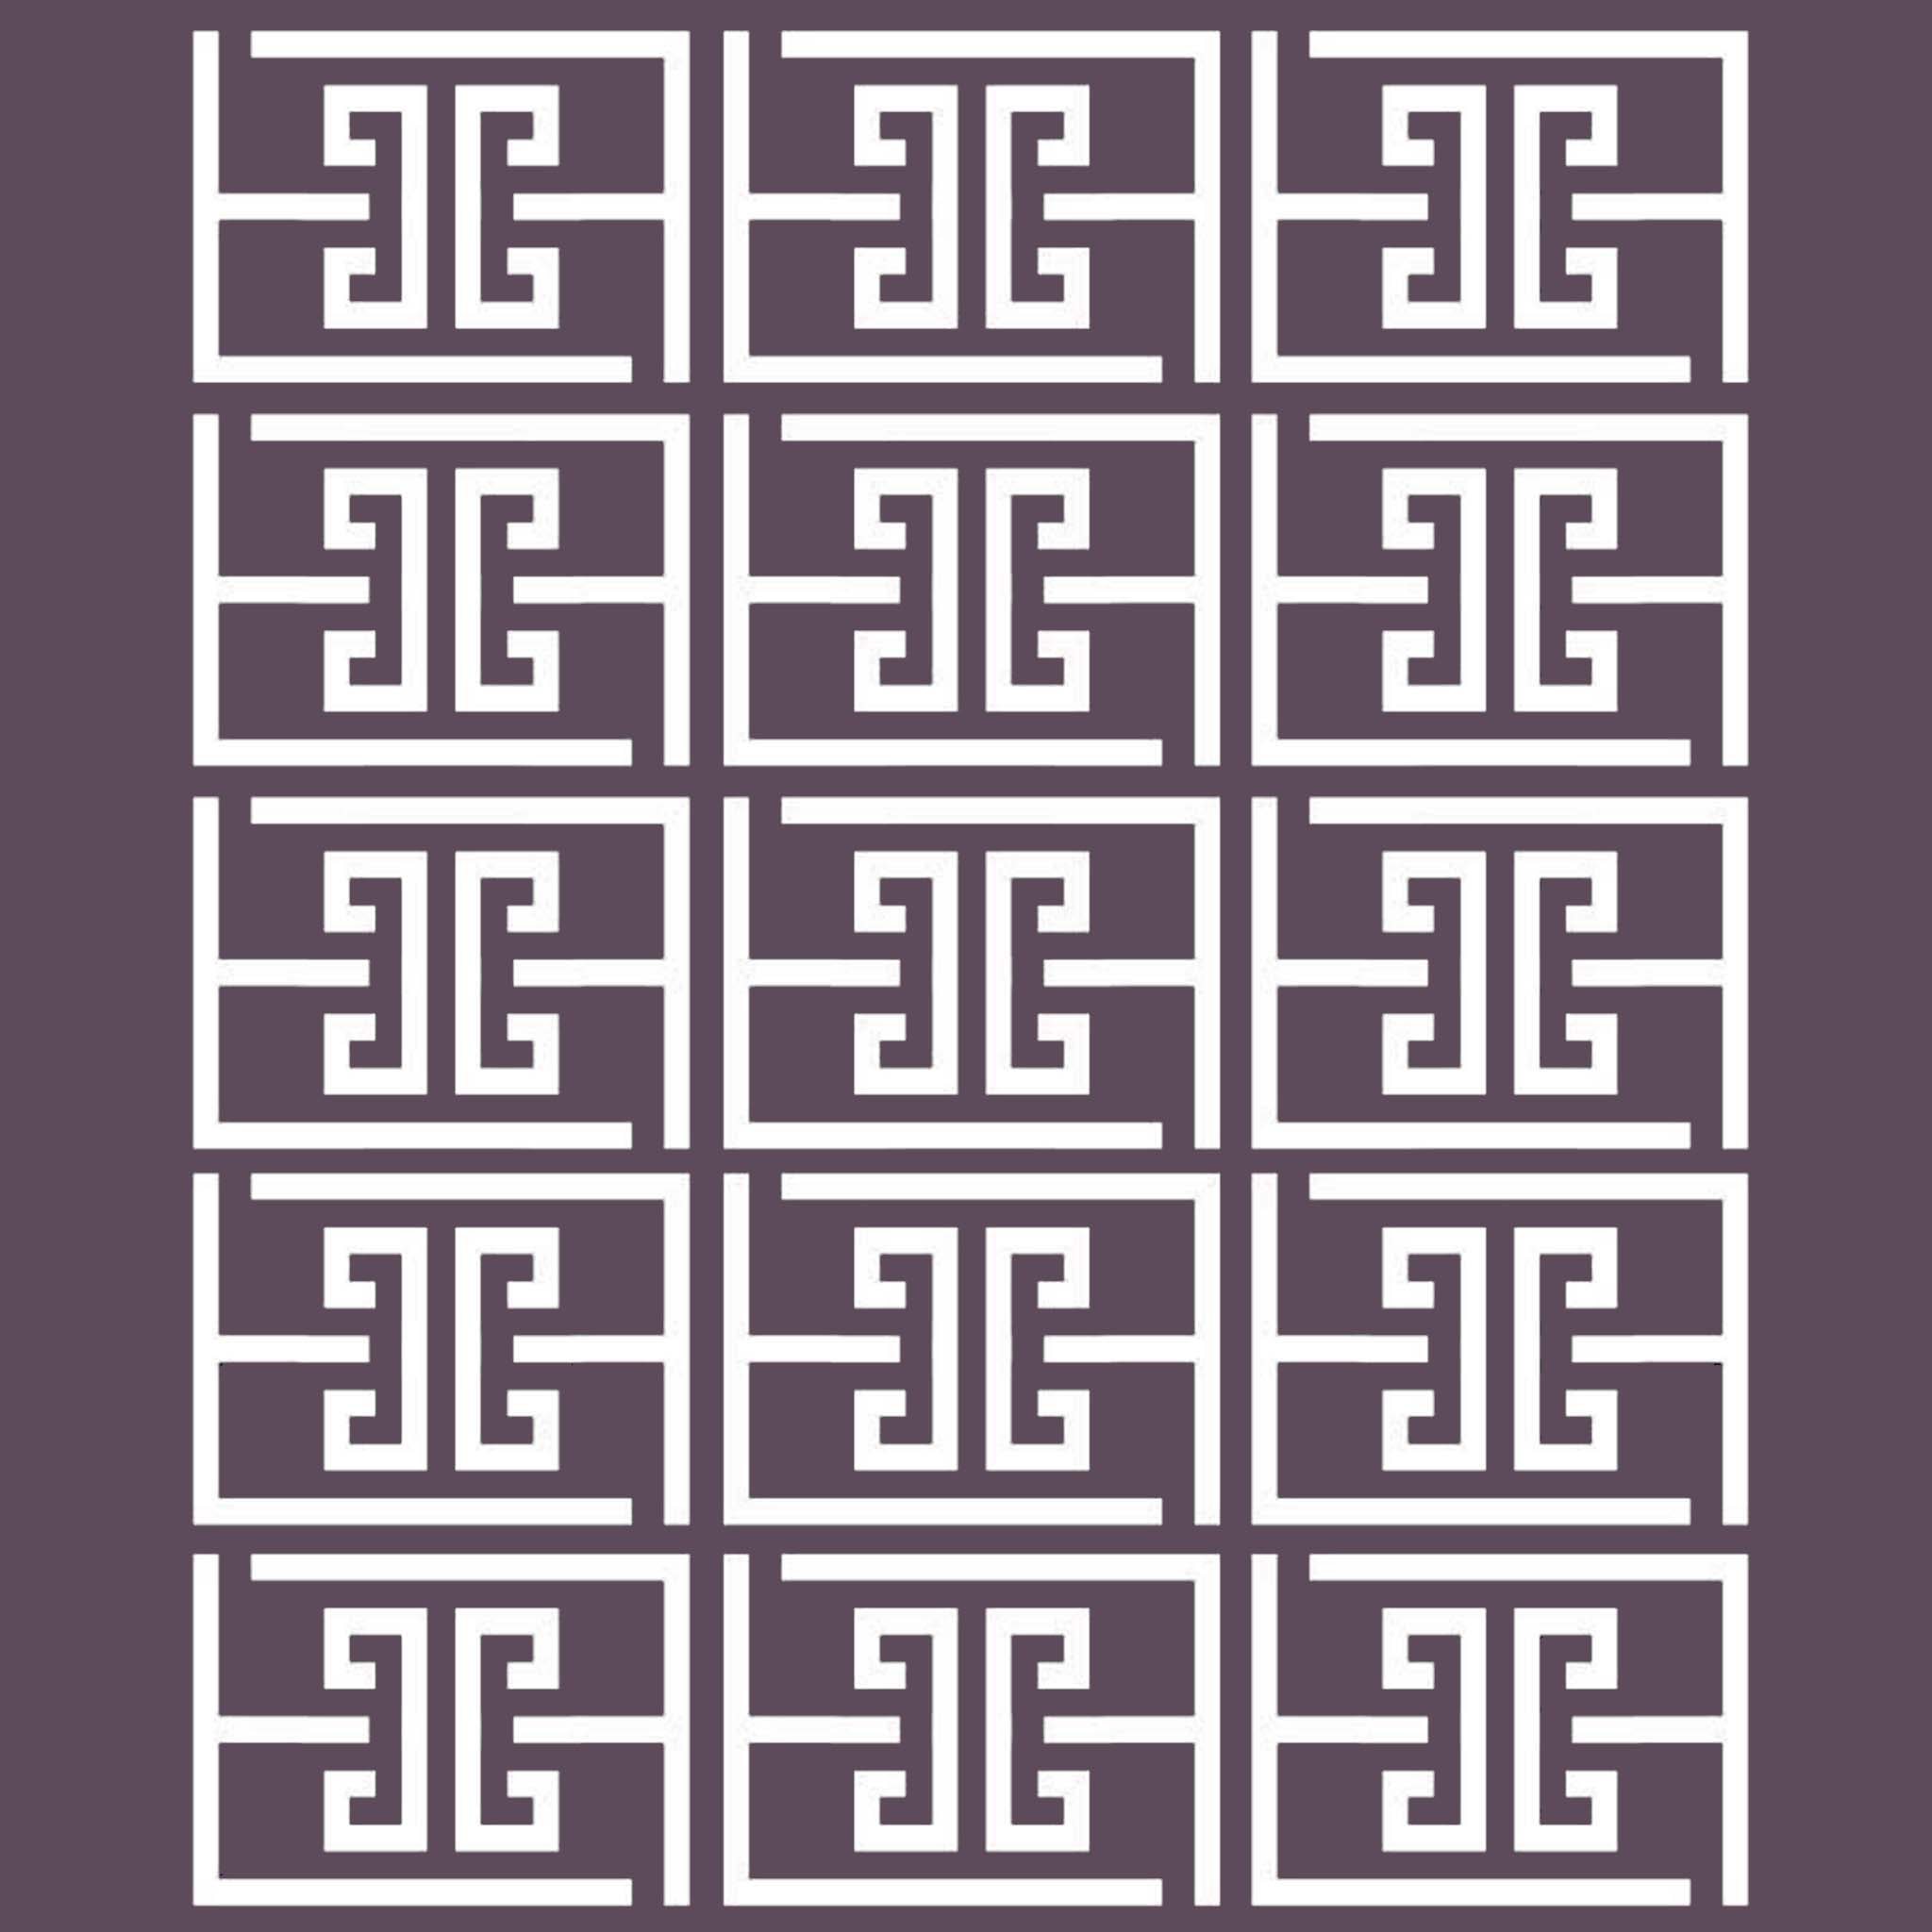 Repeating square geometric stencil design on a purple background.